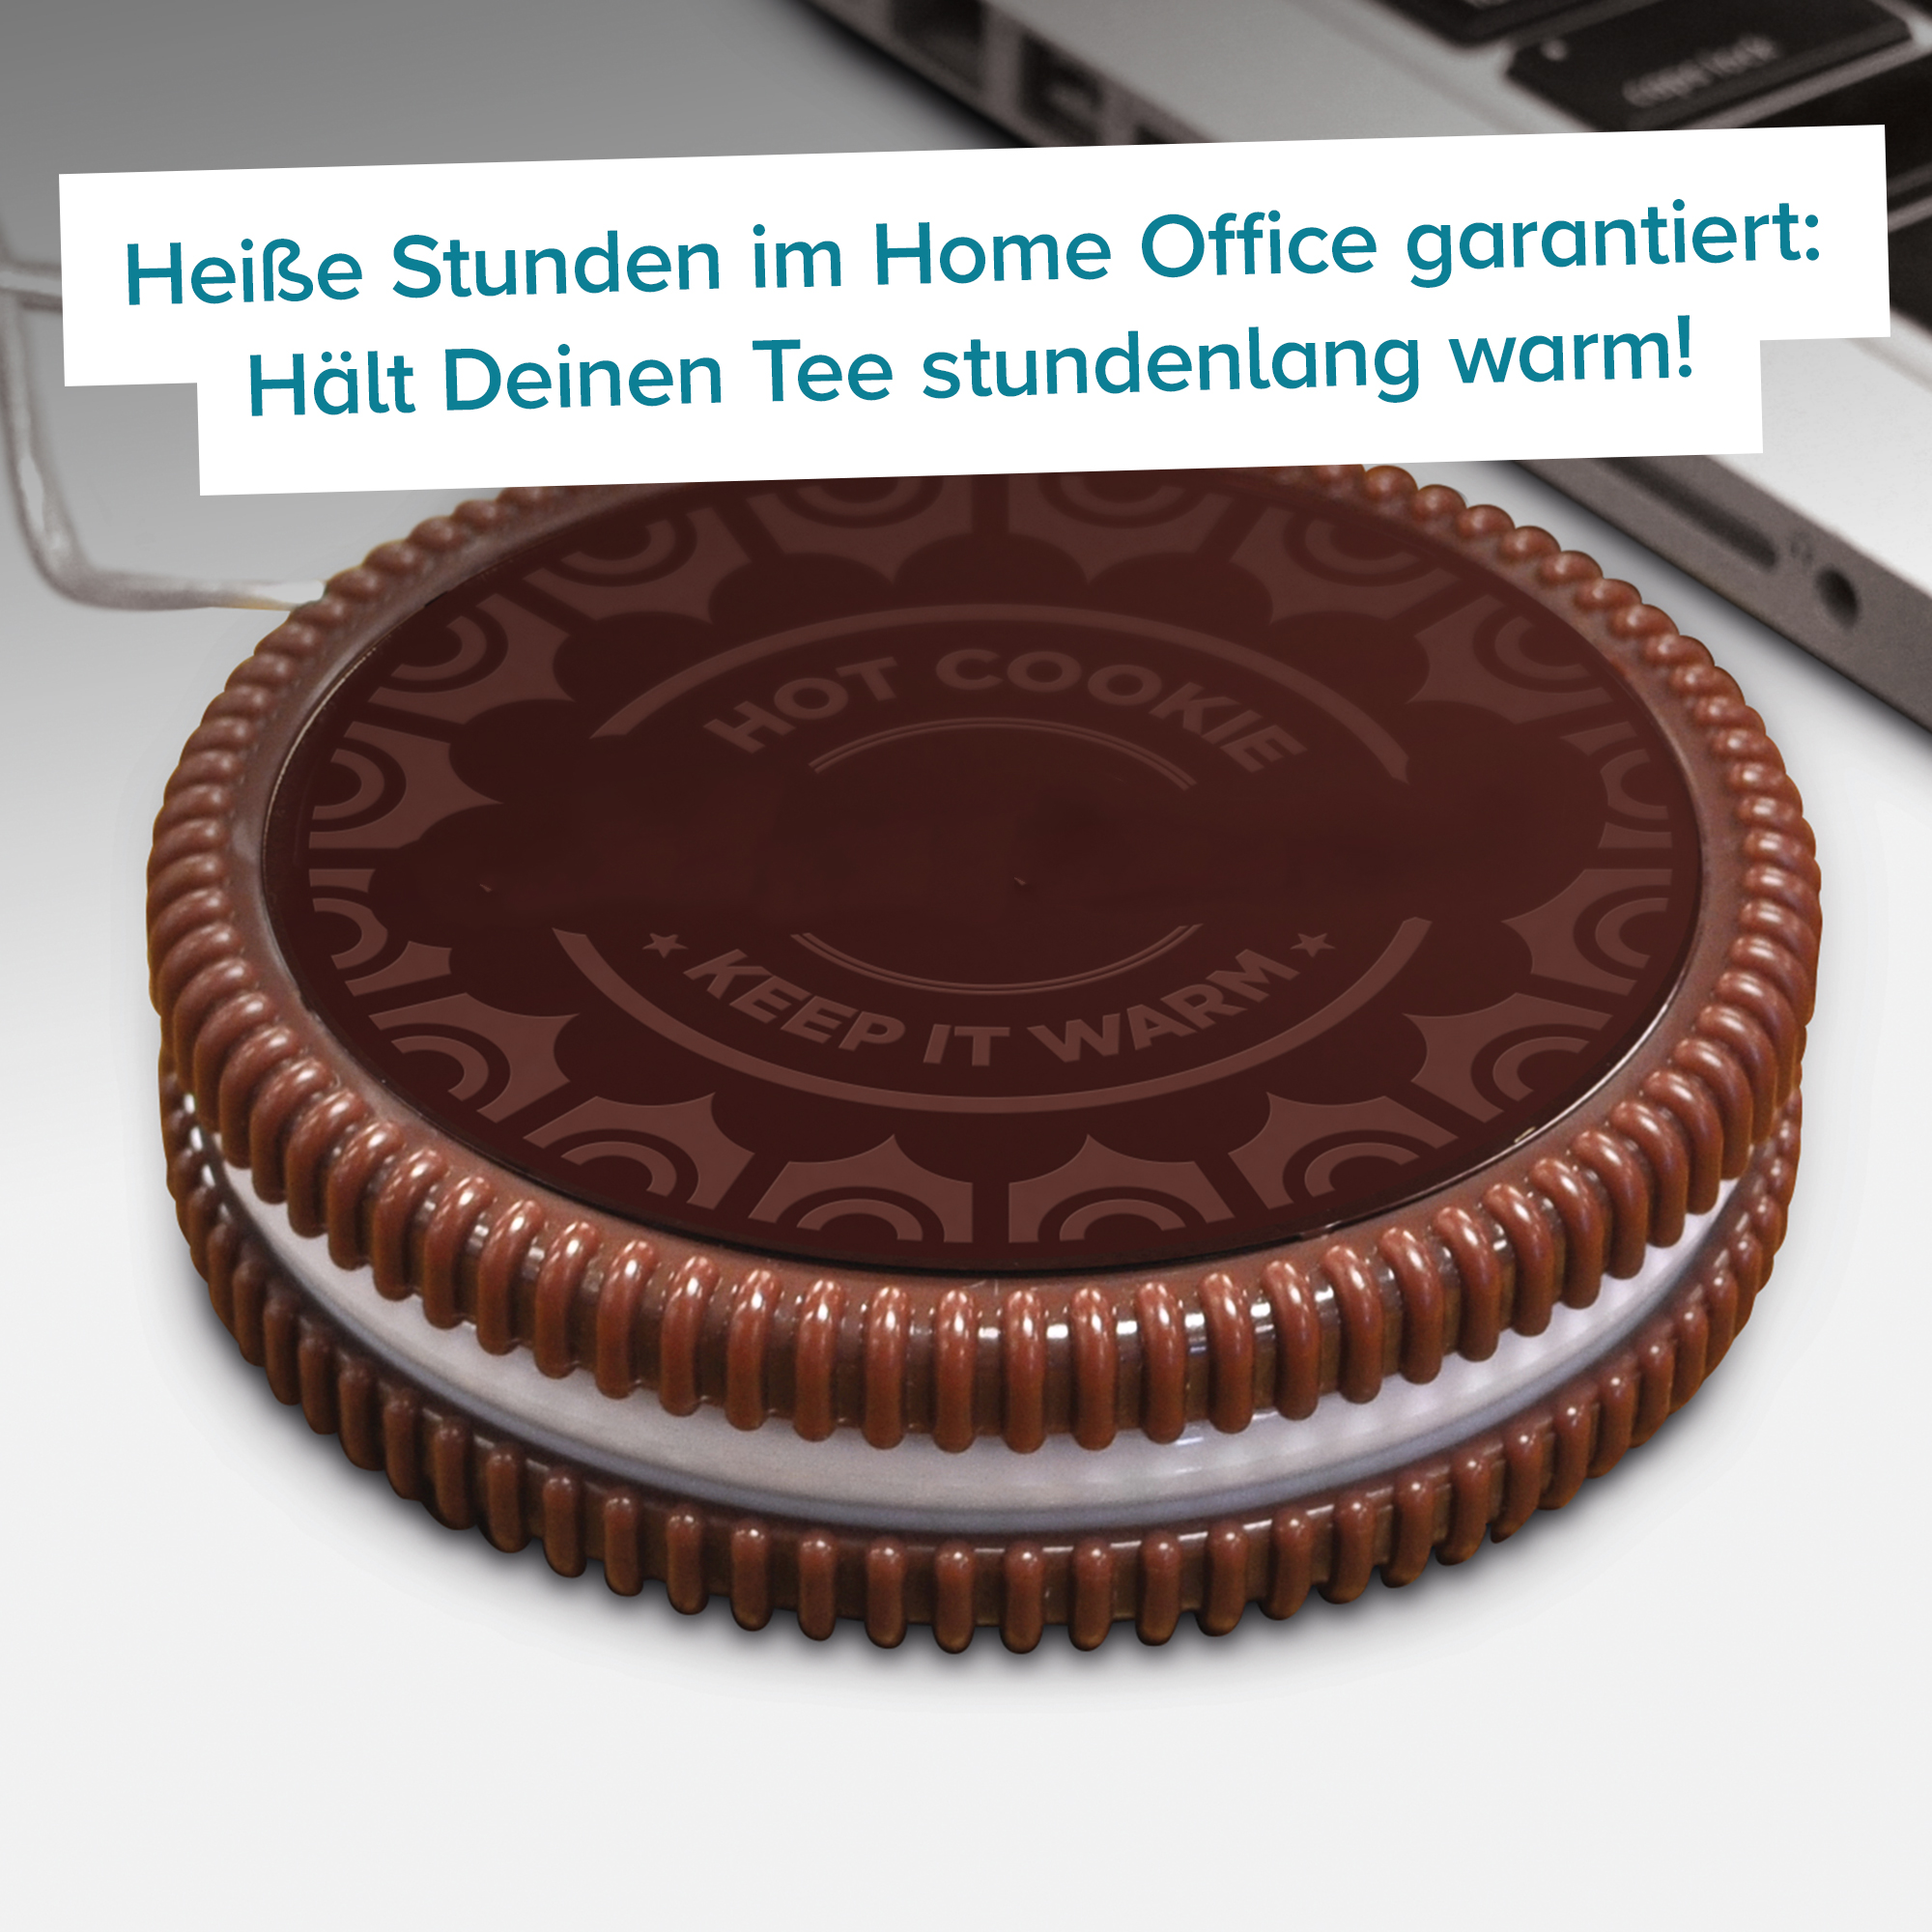 Gute Zeit Zuhause - Home Office Box 4144 - 4